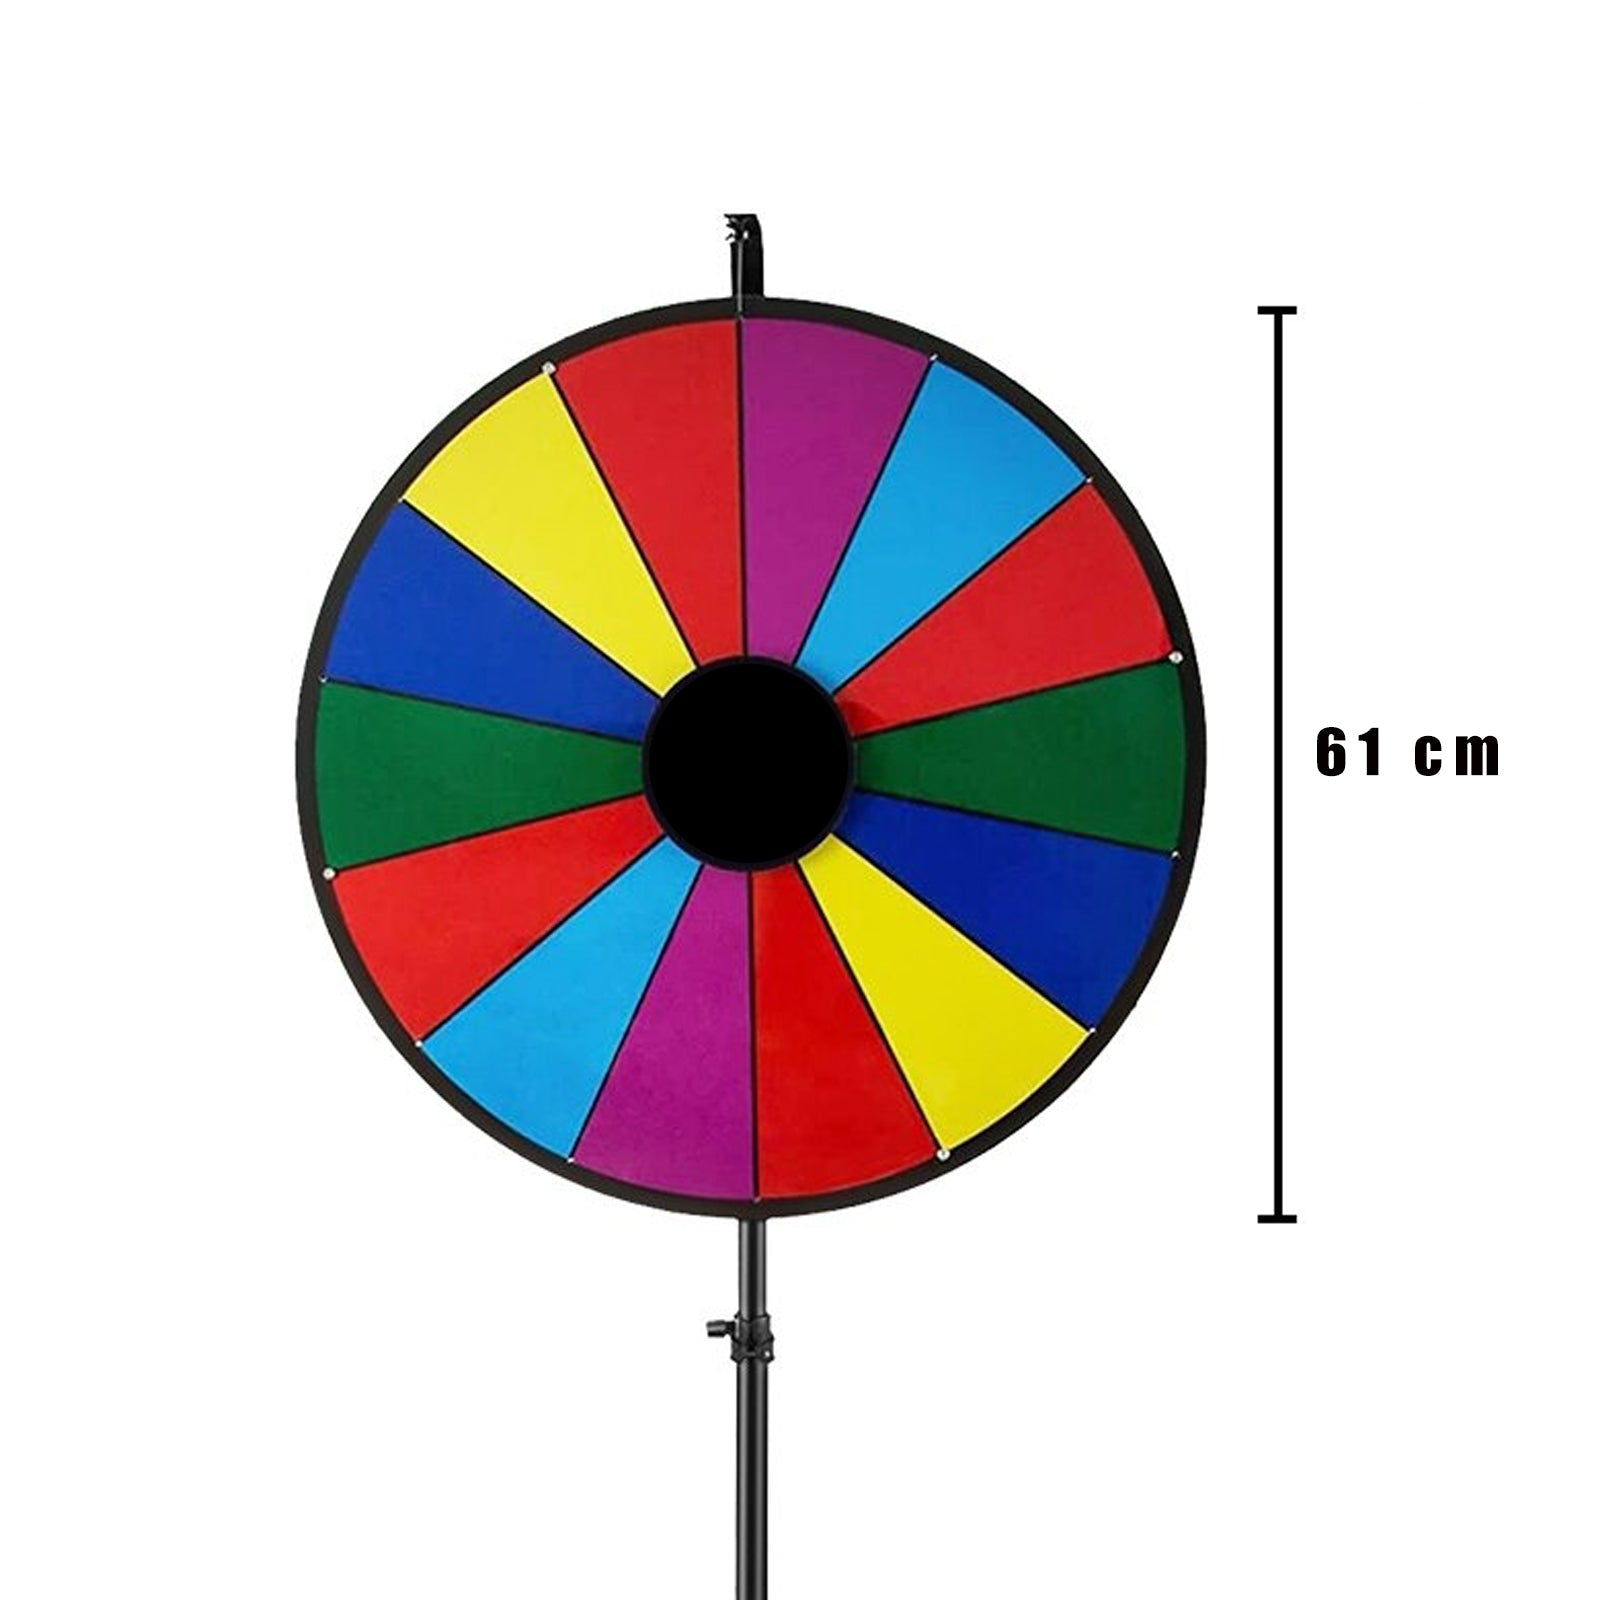 Prize Wheel, Adjustable Height, Foldable